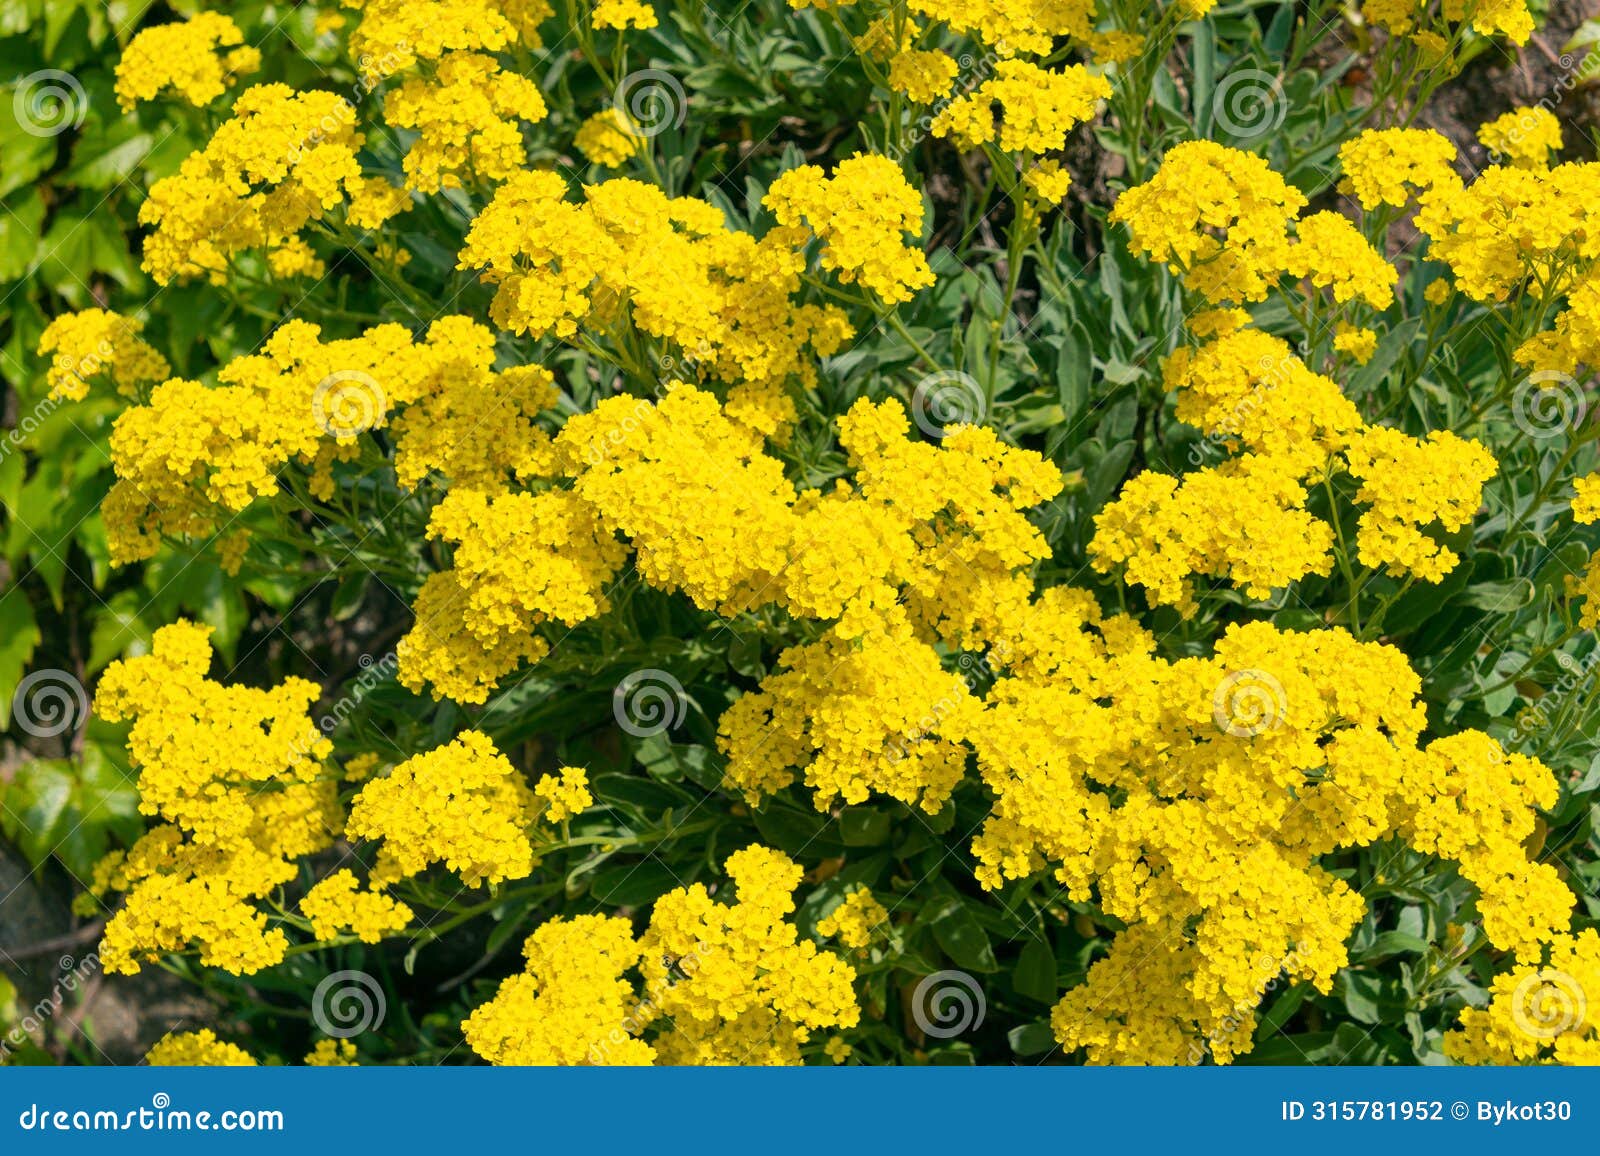 beautiful yellow flowers of aurinia saxatilis